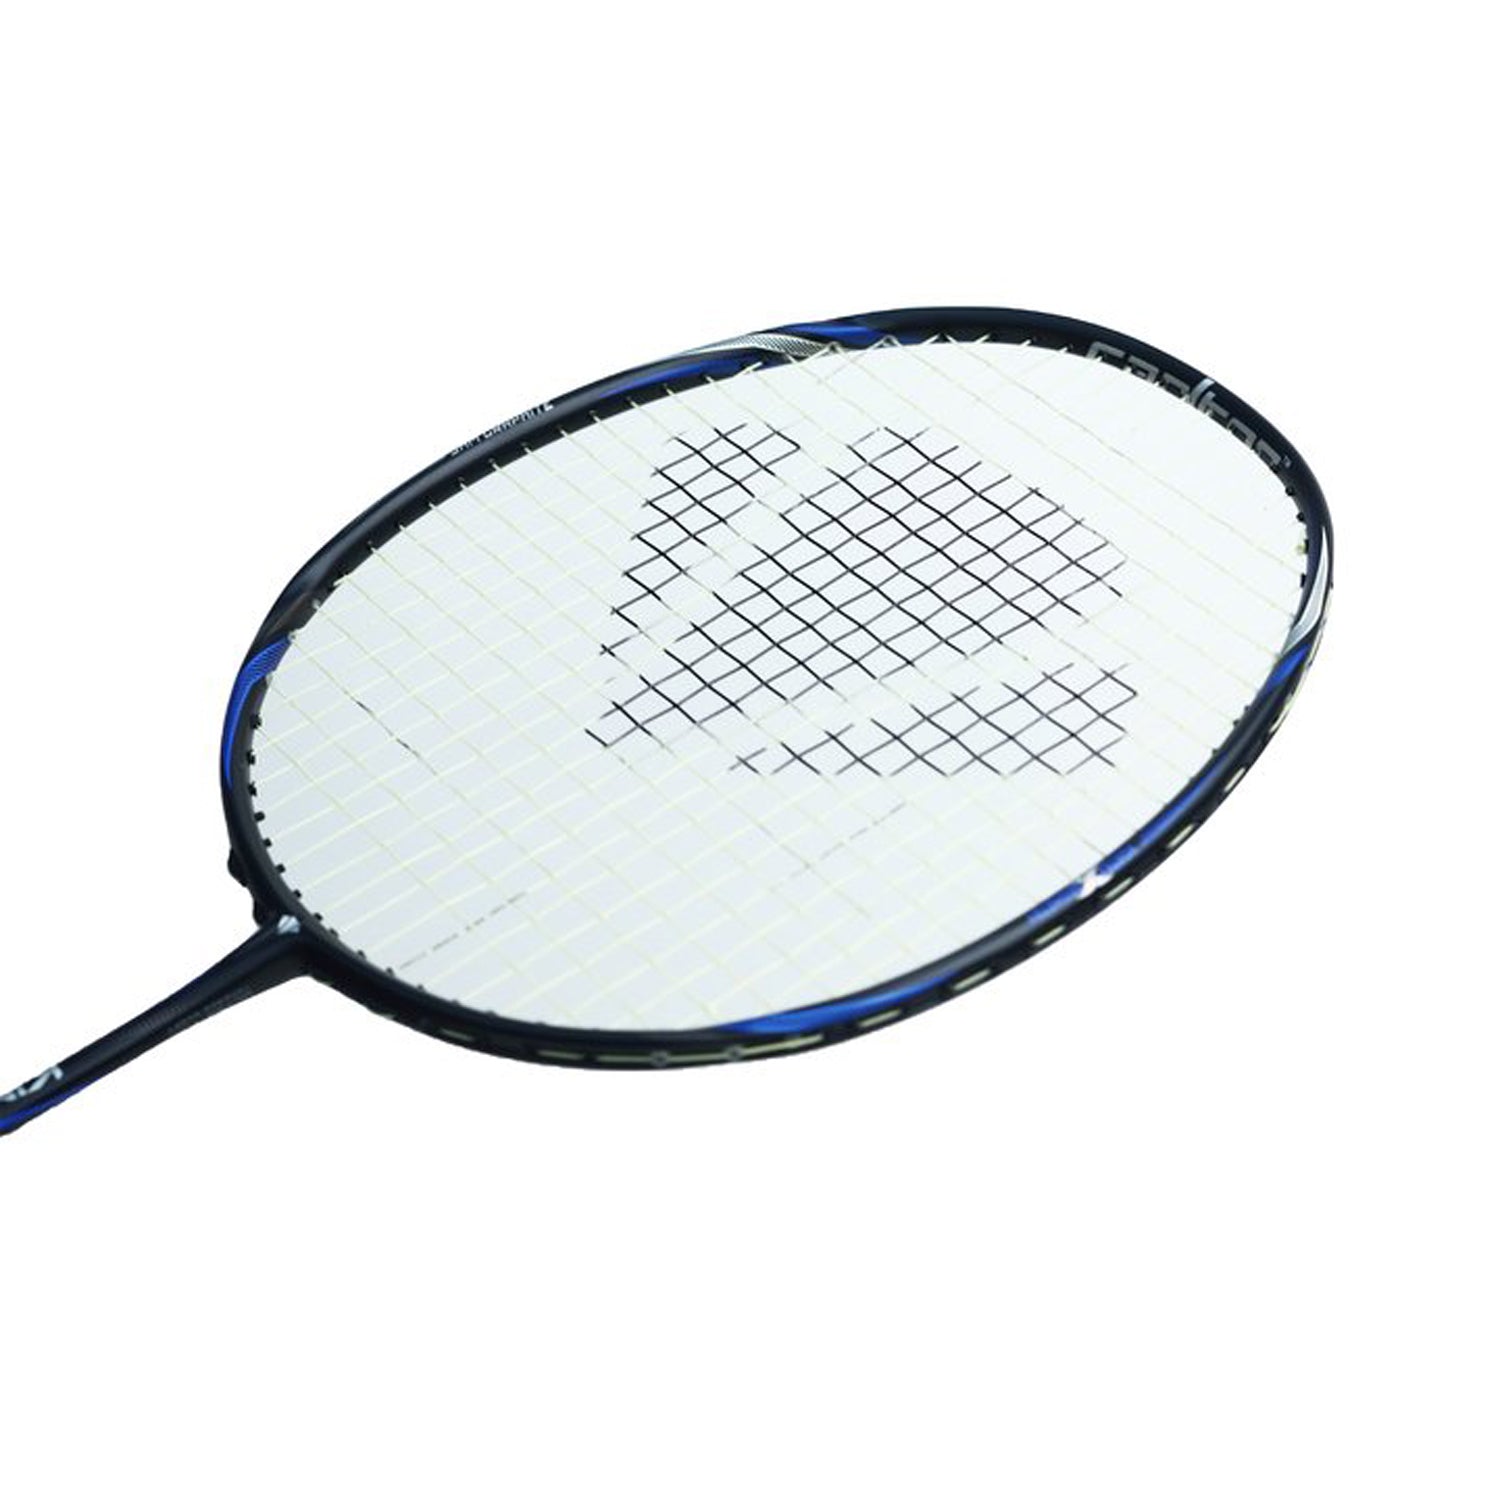 Carlton Kinesis Ultra S-Lite Unstrung Badminton Racket, Black/Blue - Best Price online Prokicksports.com